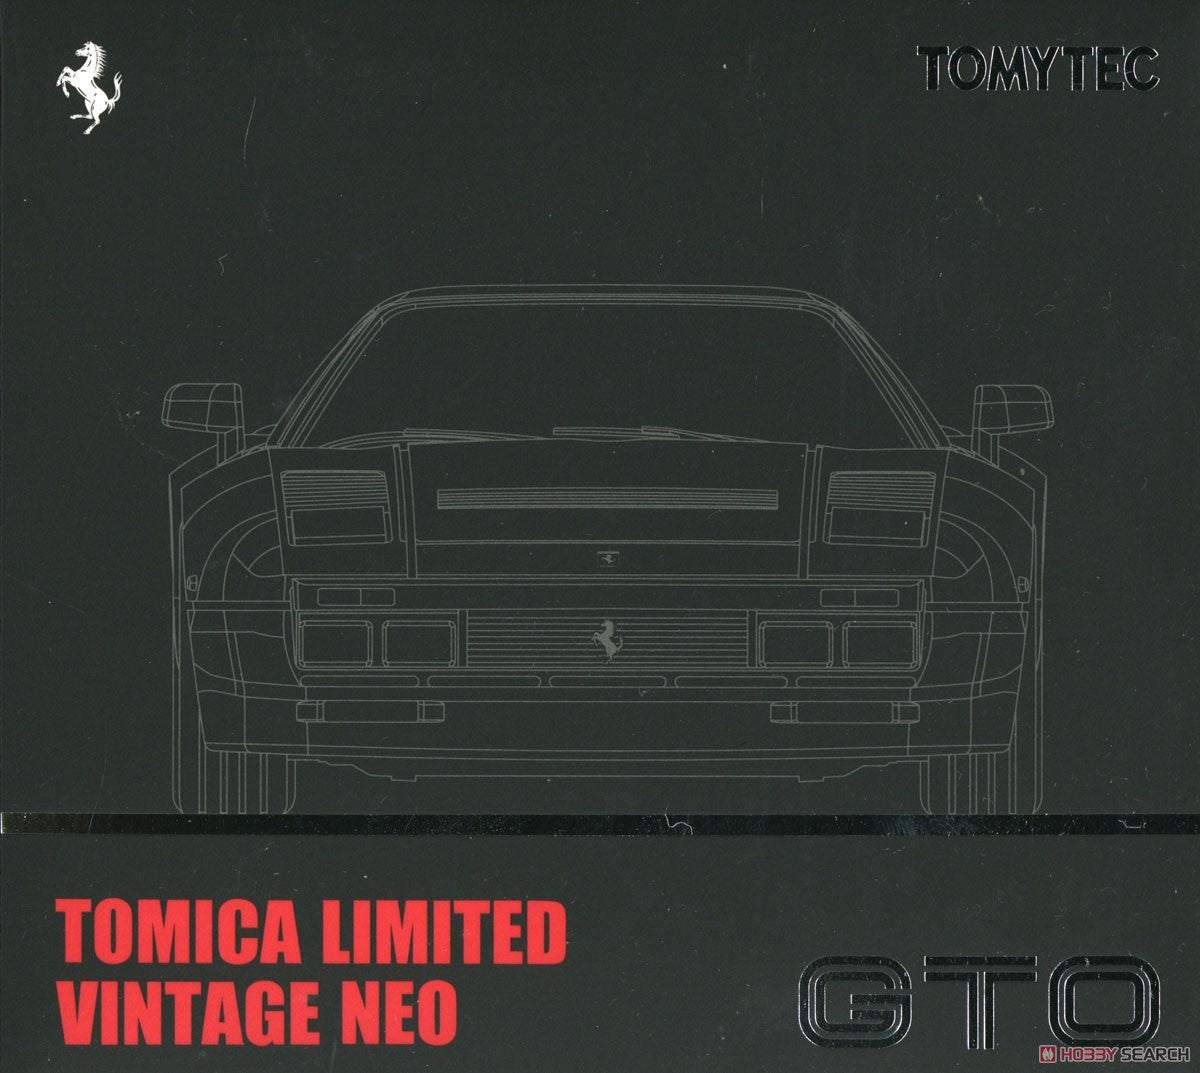 Tomica Limited Vintage Neo 1:64 Ferrari GTO Black